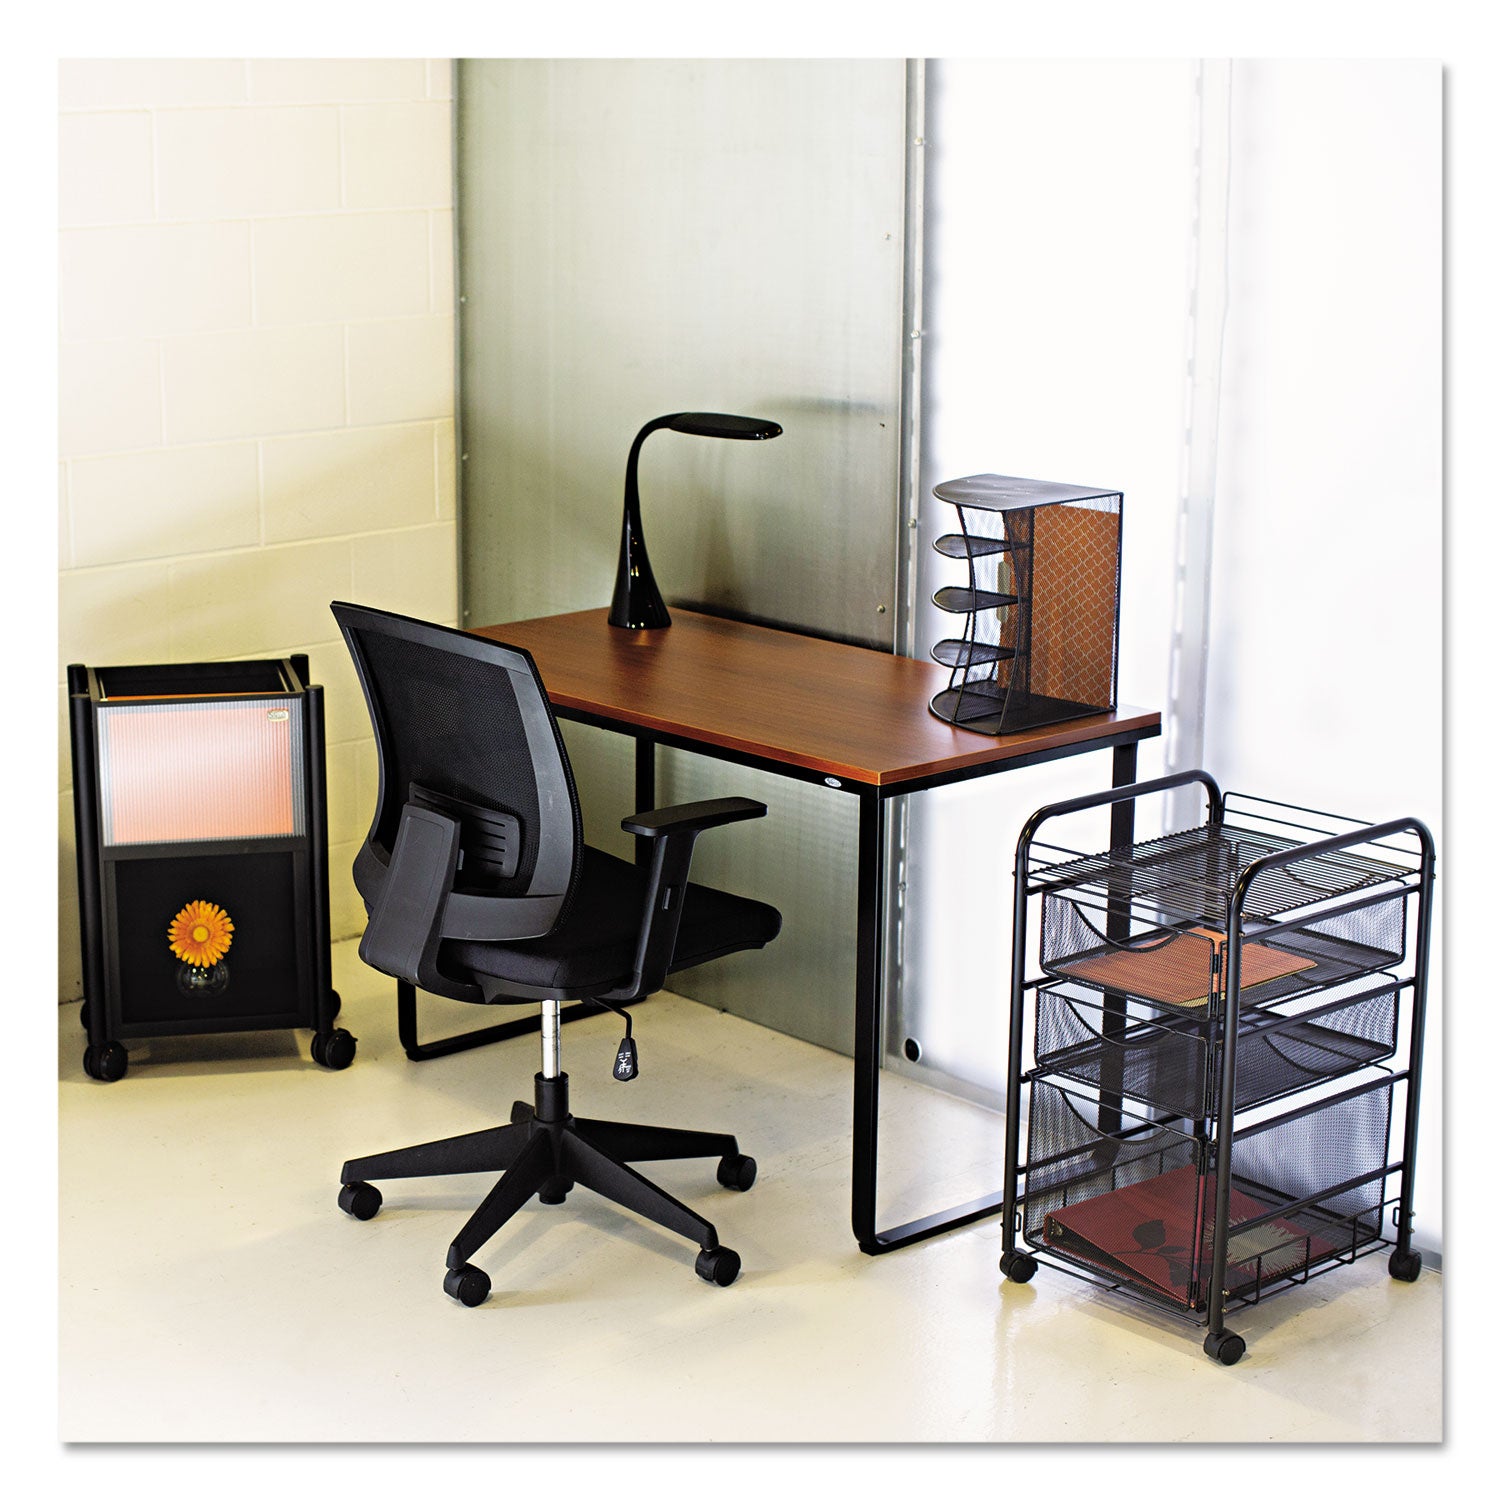 Steel Desk, 47.25" x 24" x 28.75", Cherry/Black - 